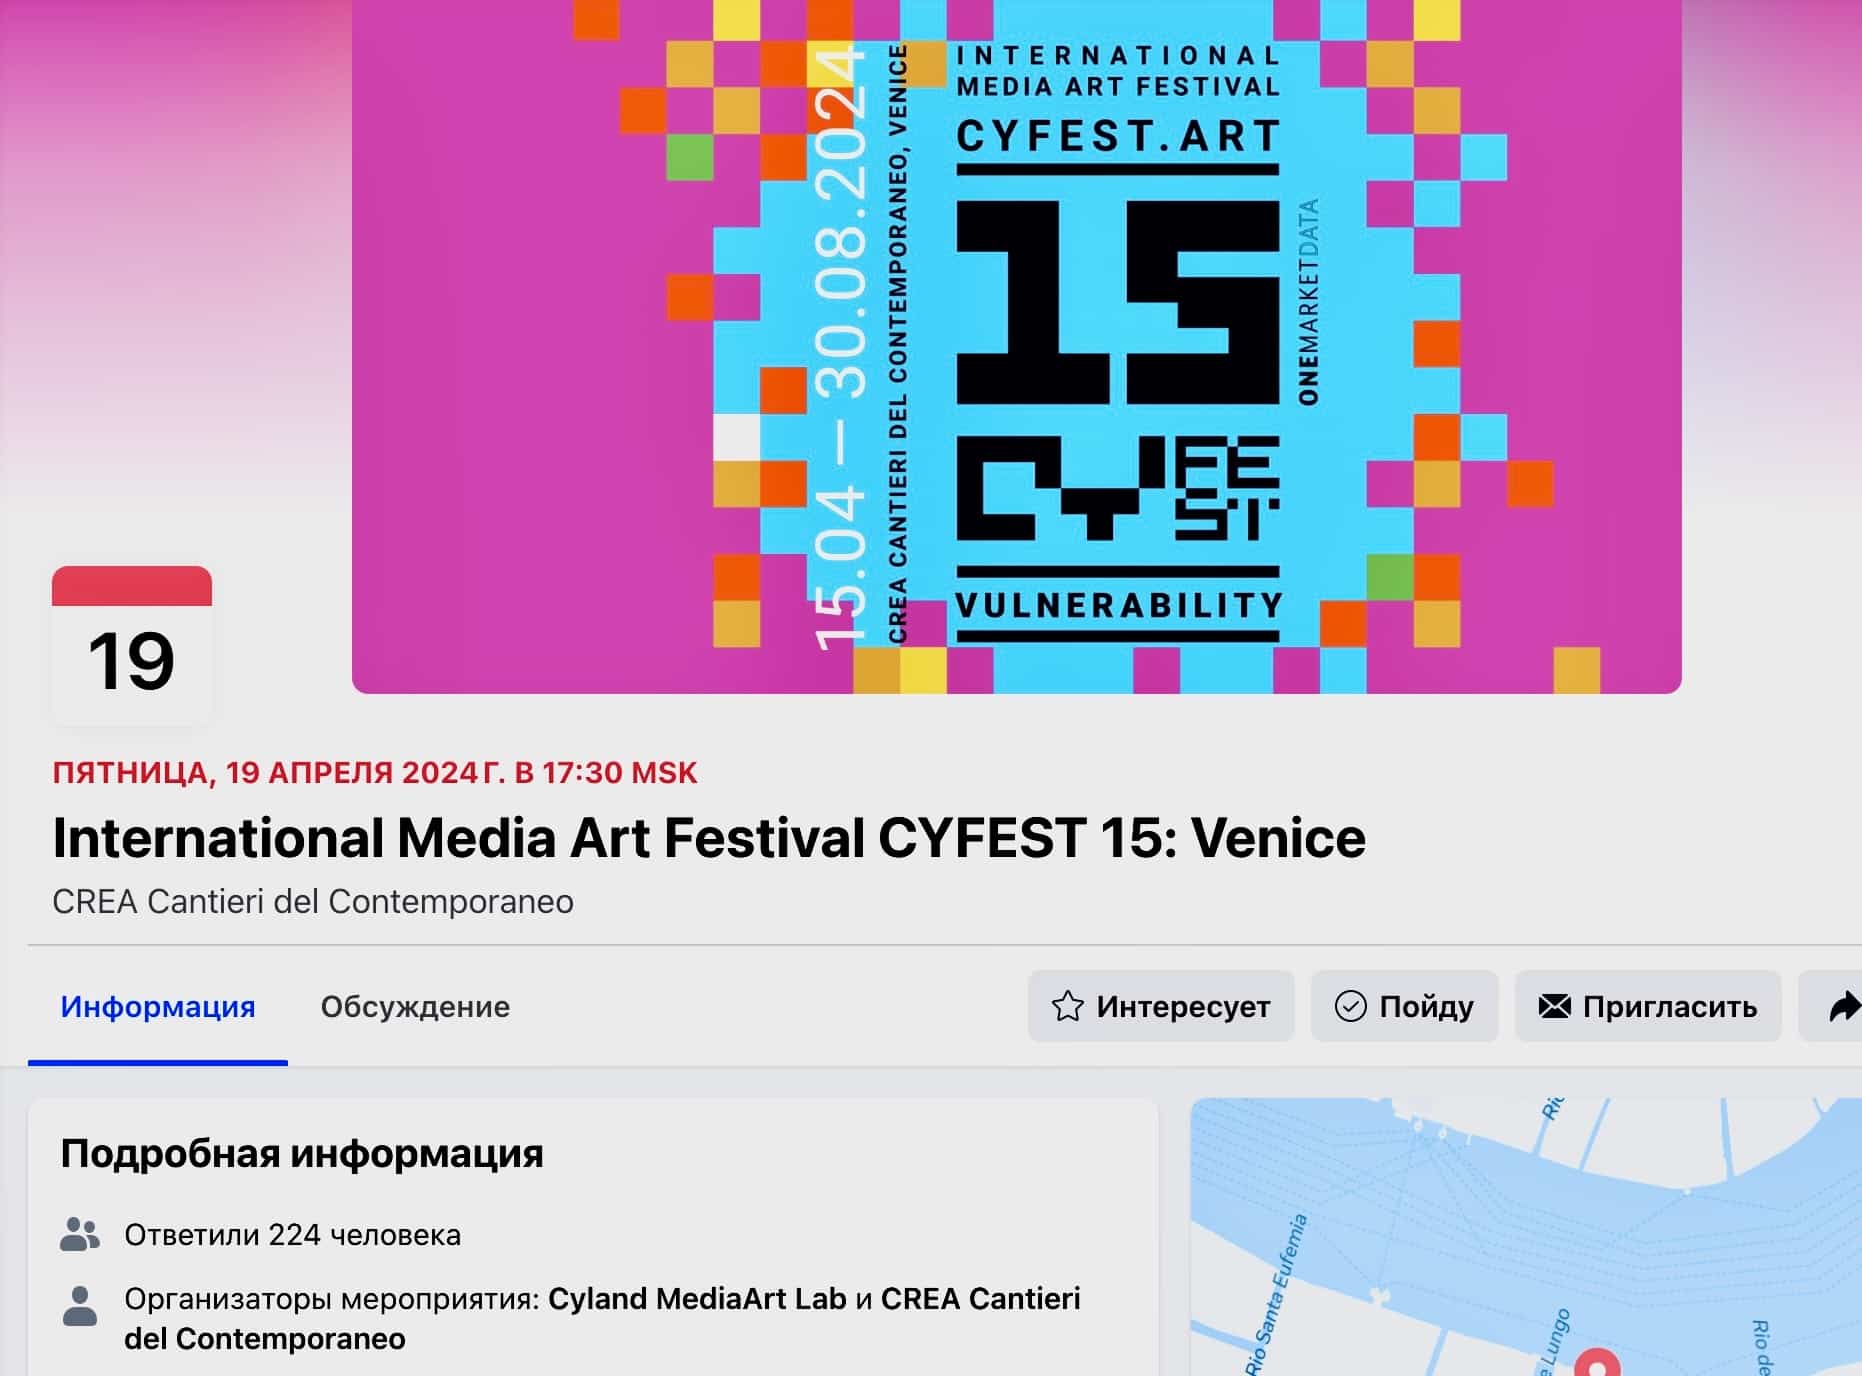 Cкриншот страницы Facebook «International Media Art Festival CYFEST 15: Venice»